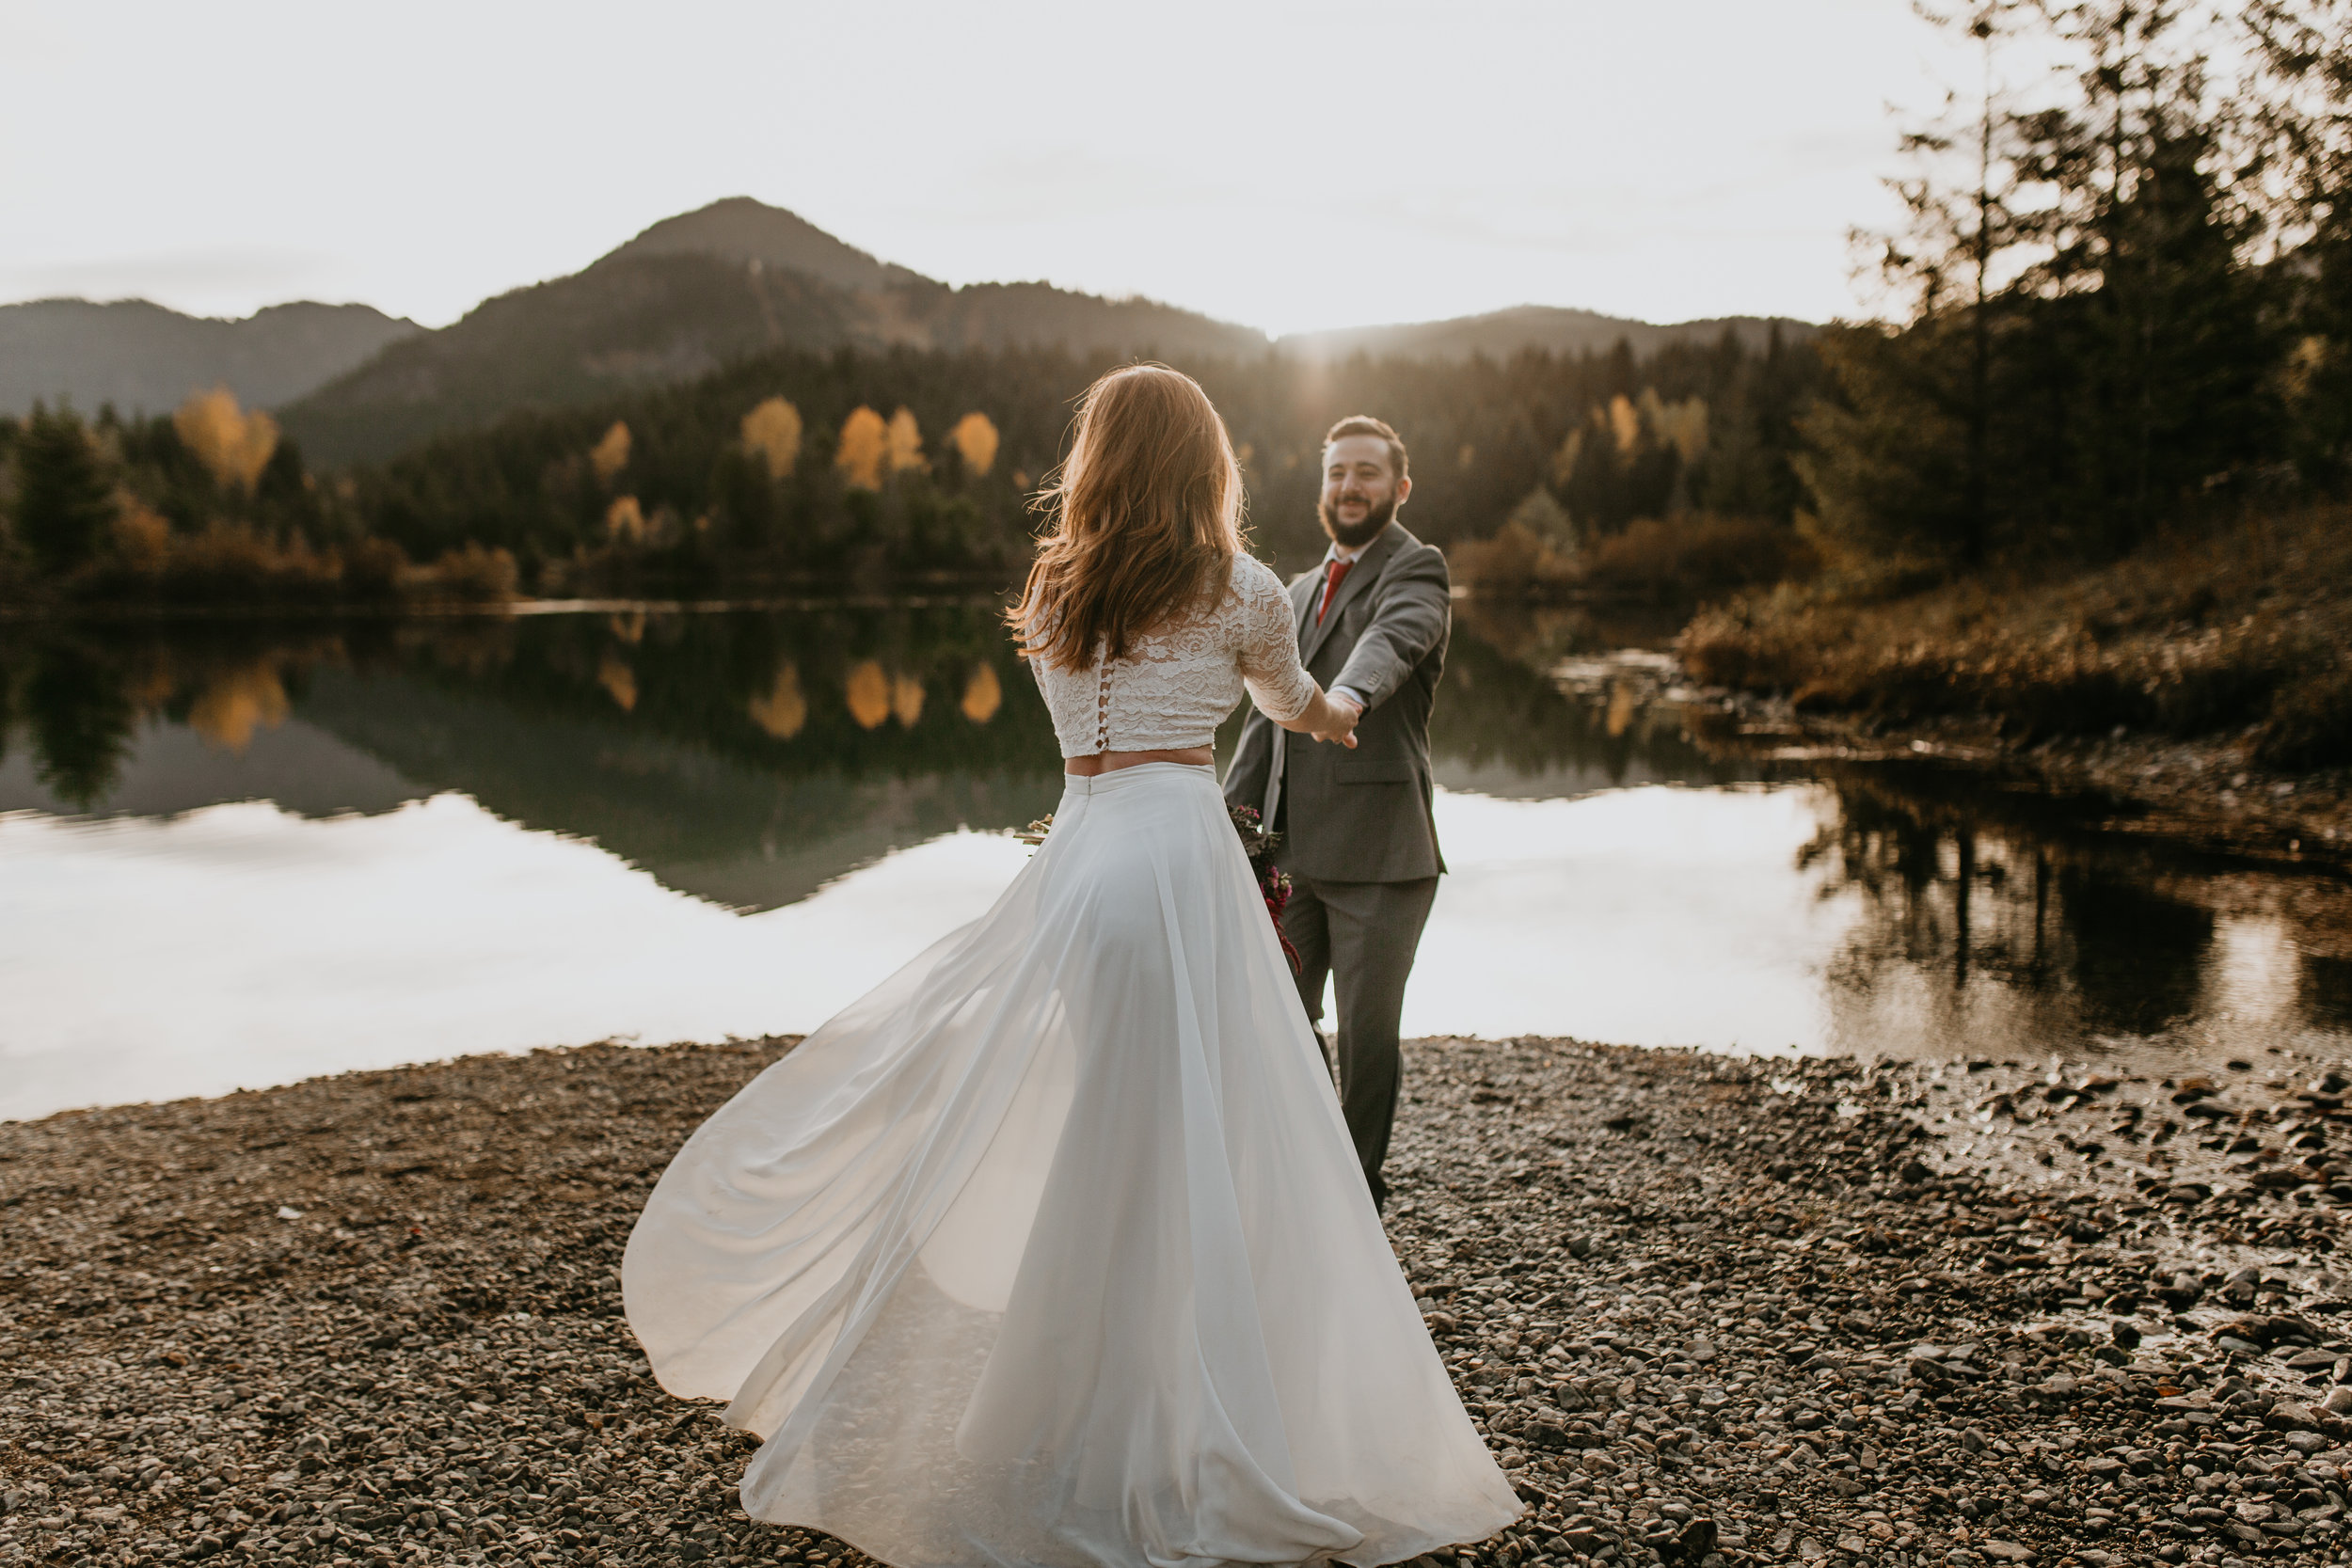 nicole-daacke-photography-mountain-view-elopement-at-gold-creek-pond-snoqualmie-washington-wa-elopement-photographer-photography-adventure-elopement-in-washington-fall-lakeside-golden-sunset-boho-fun-bride-0406.jpg